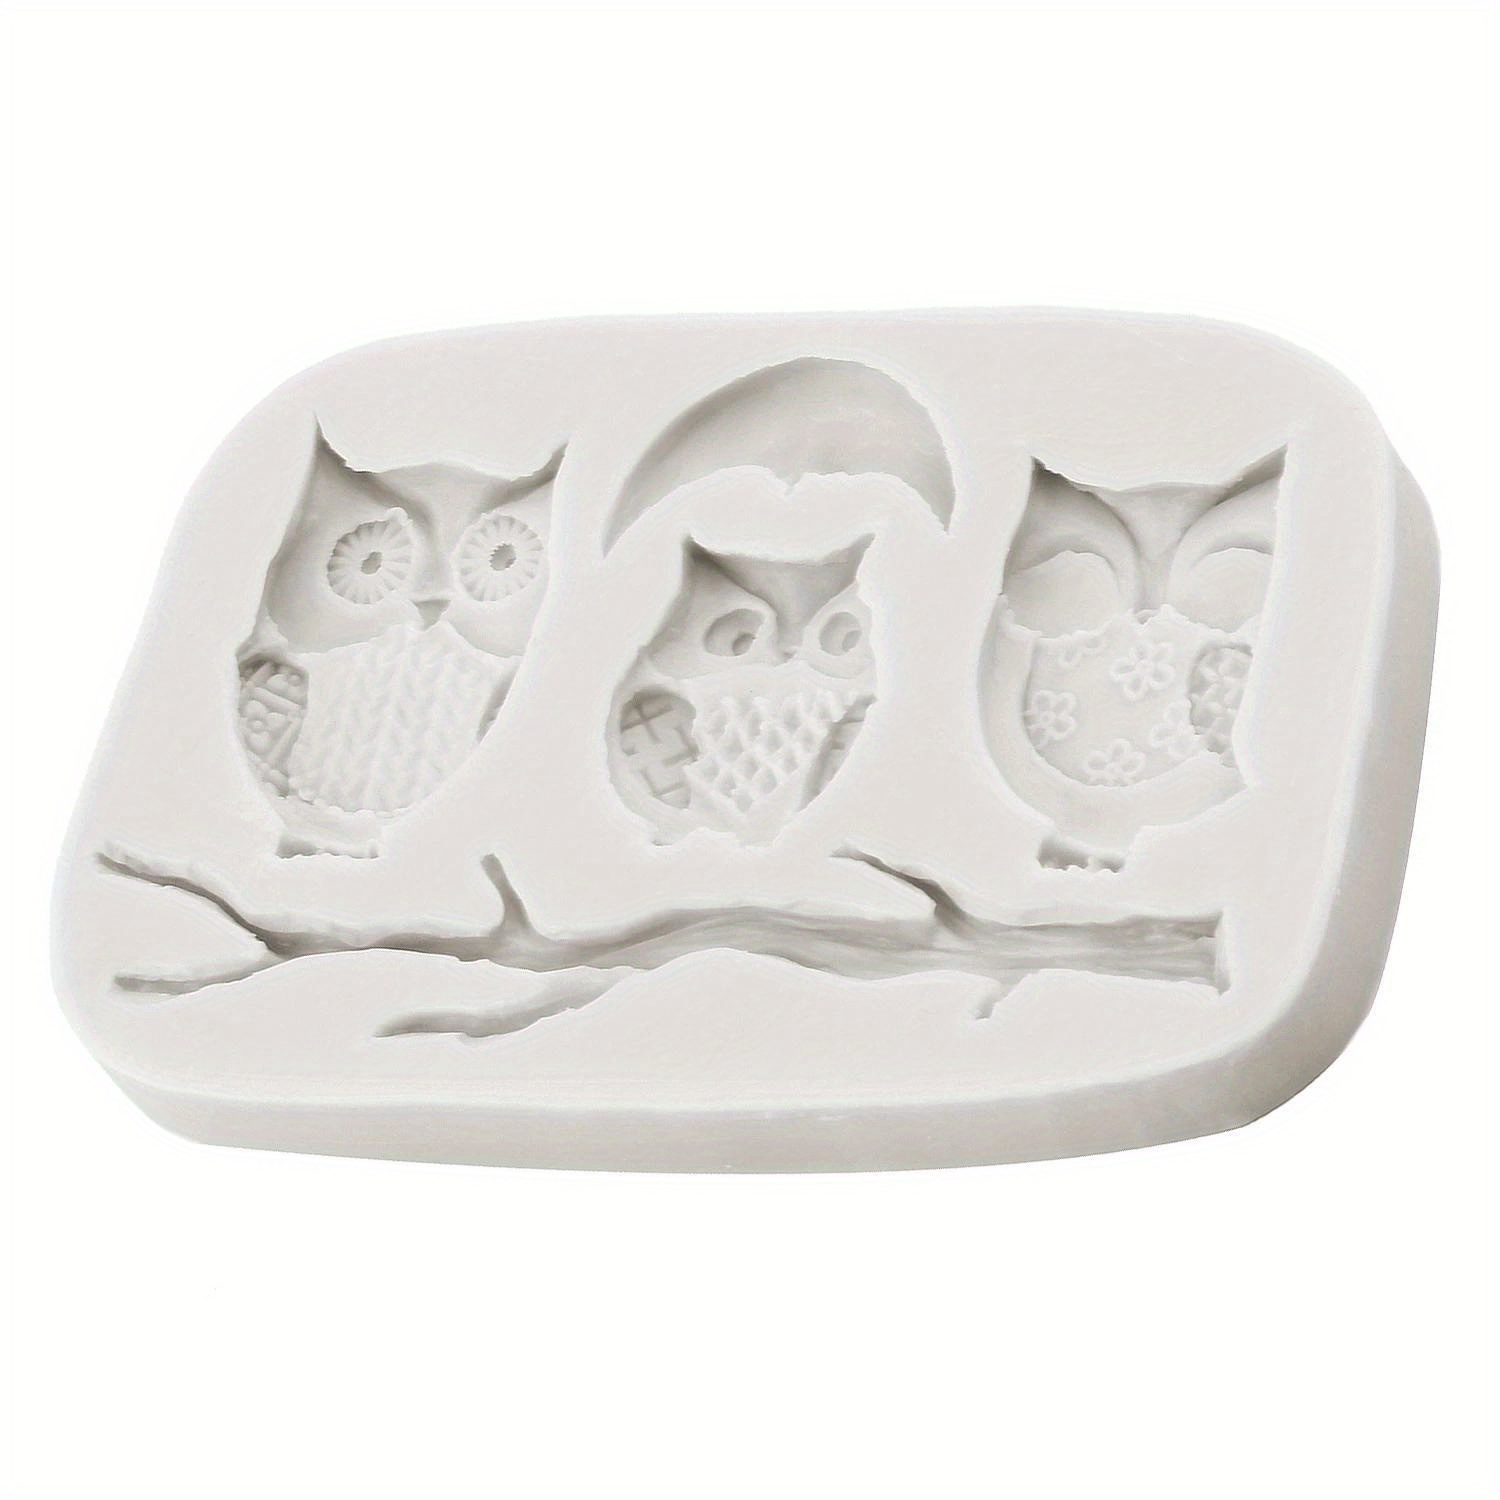 

1pc Cartoon Owl Silicone Mold Diy Fondant Cake Decorating Tools Cupcake Topper Chocolate Gumpaste Baking Mold Plaster Ornament